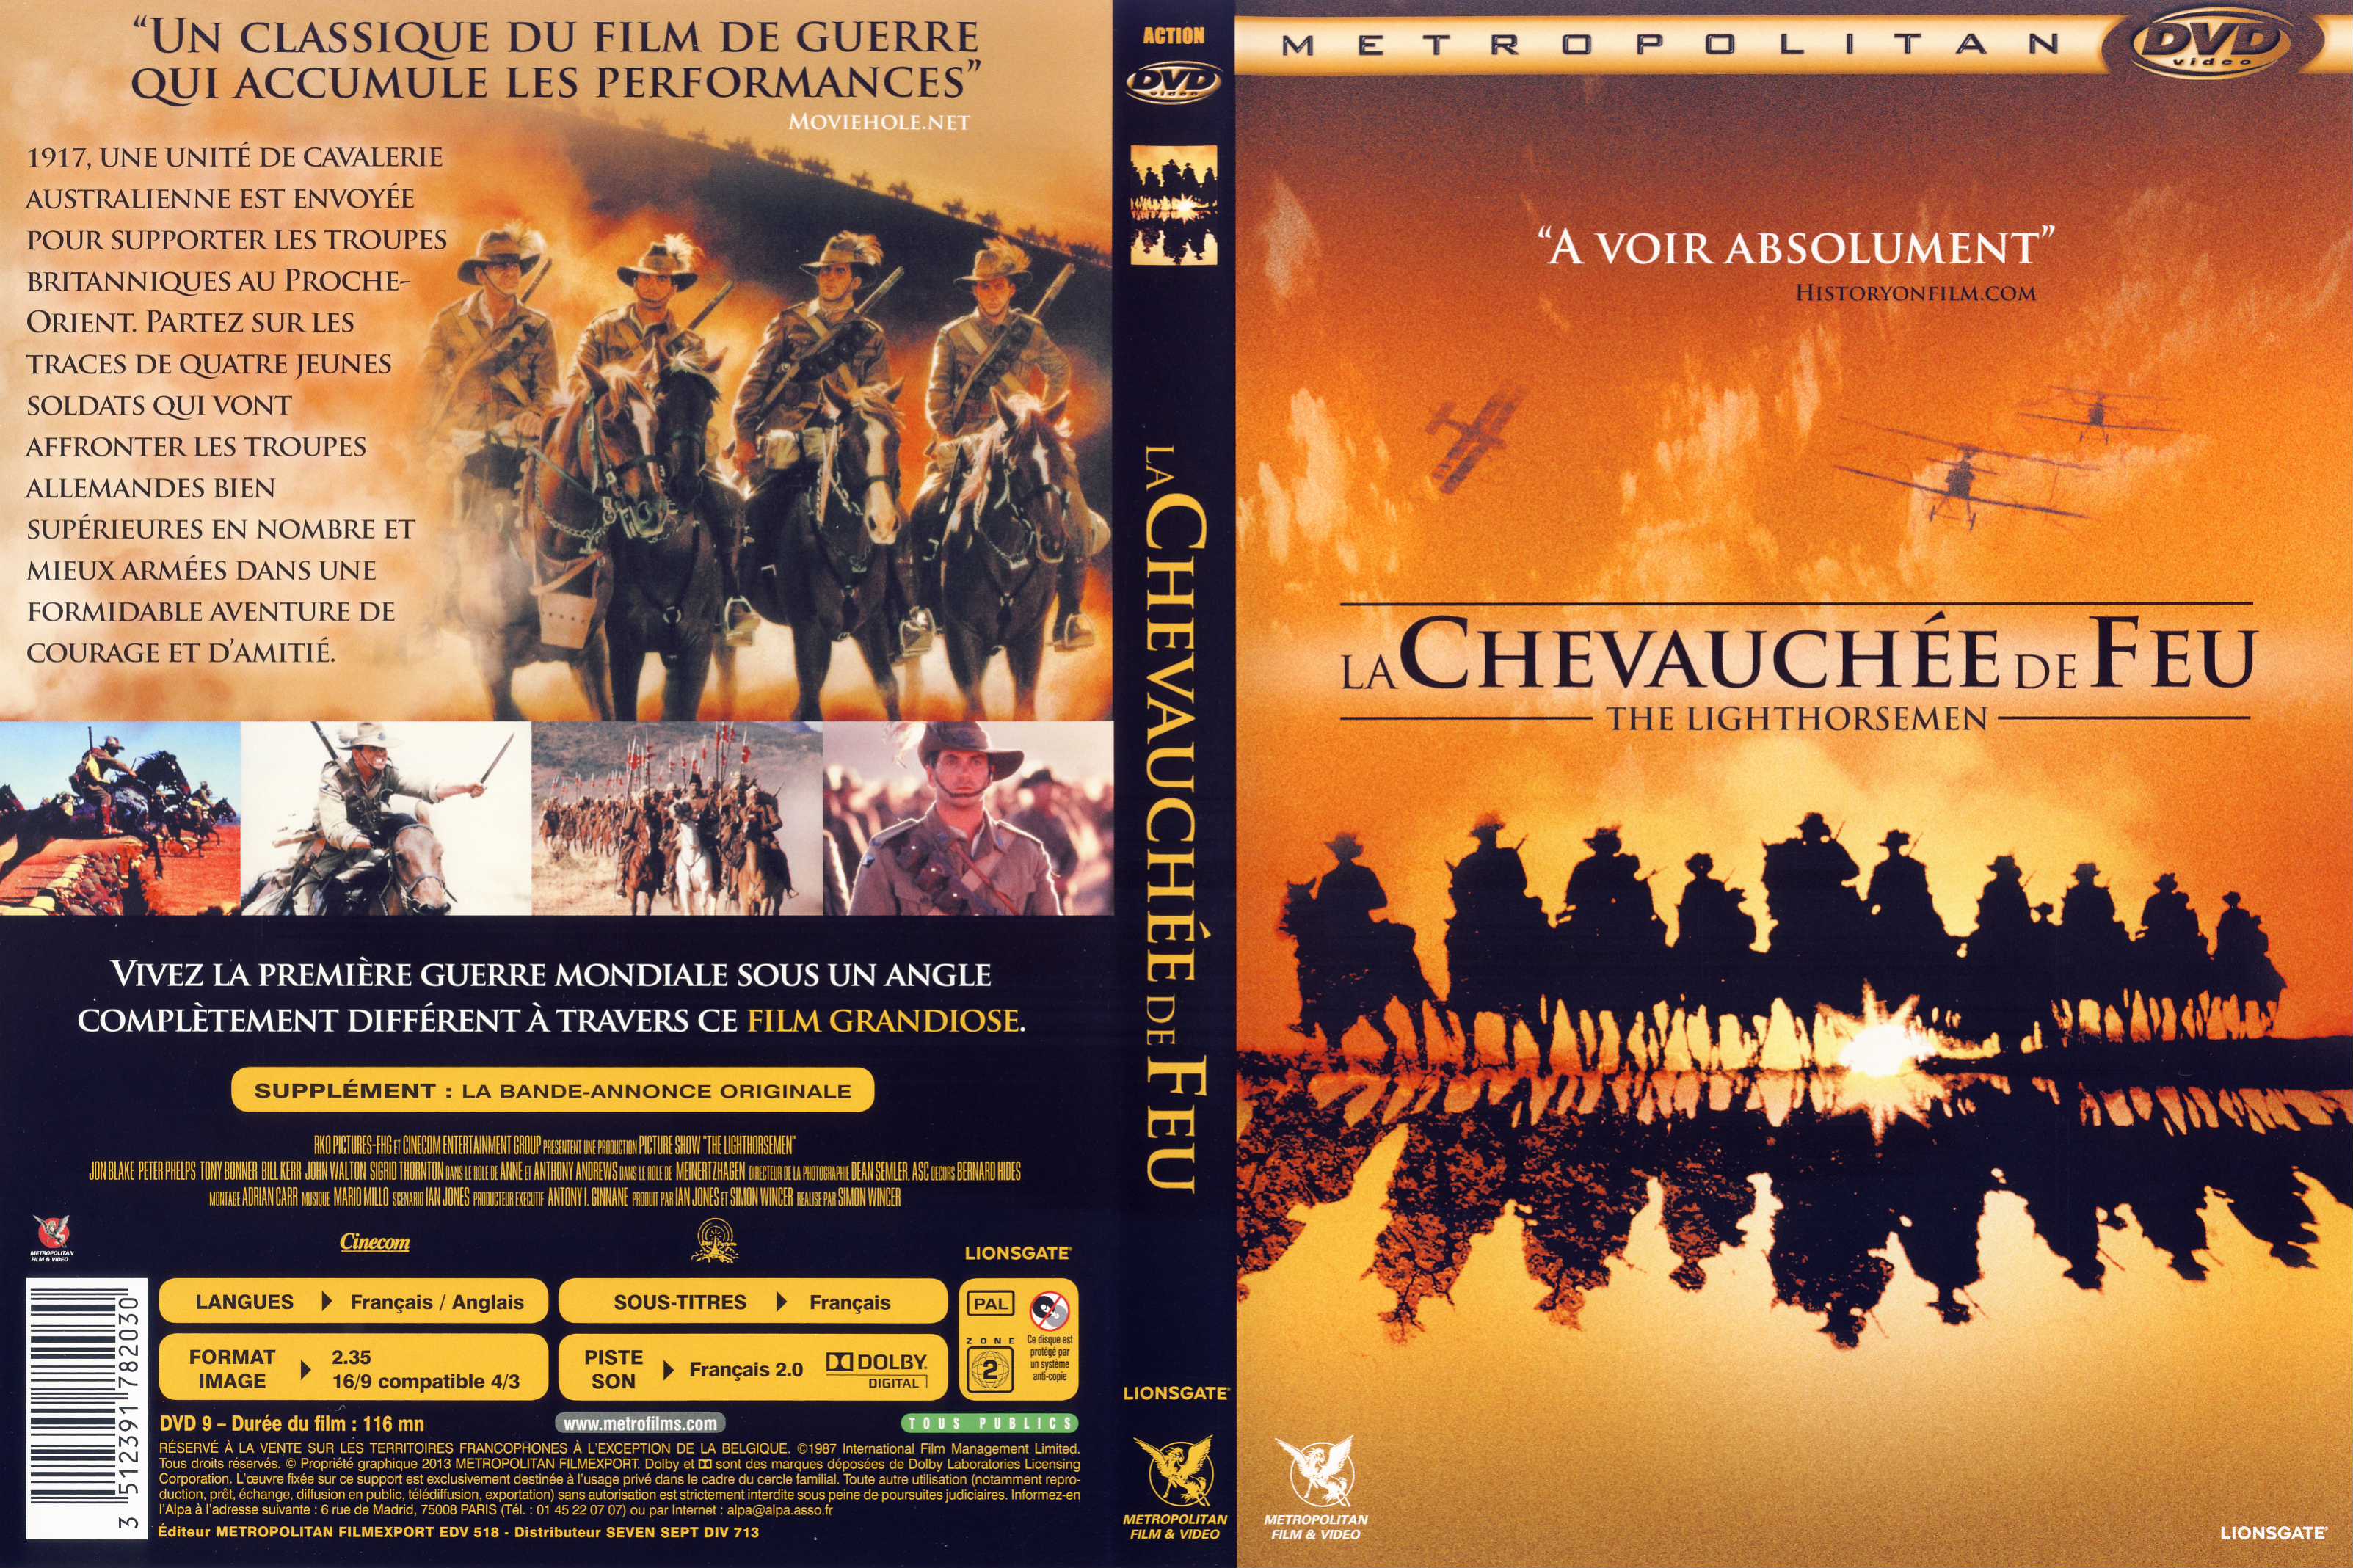 Jaquette DVD La chevauche de feu v3